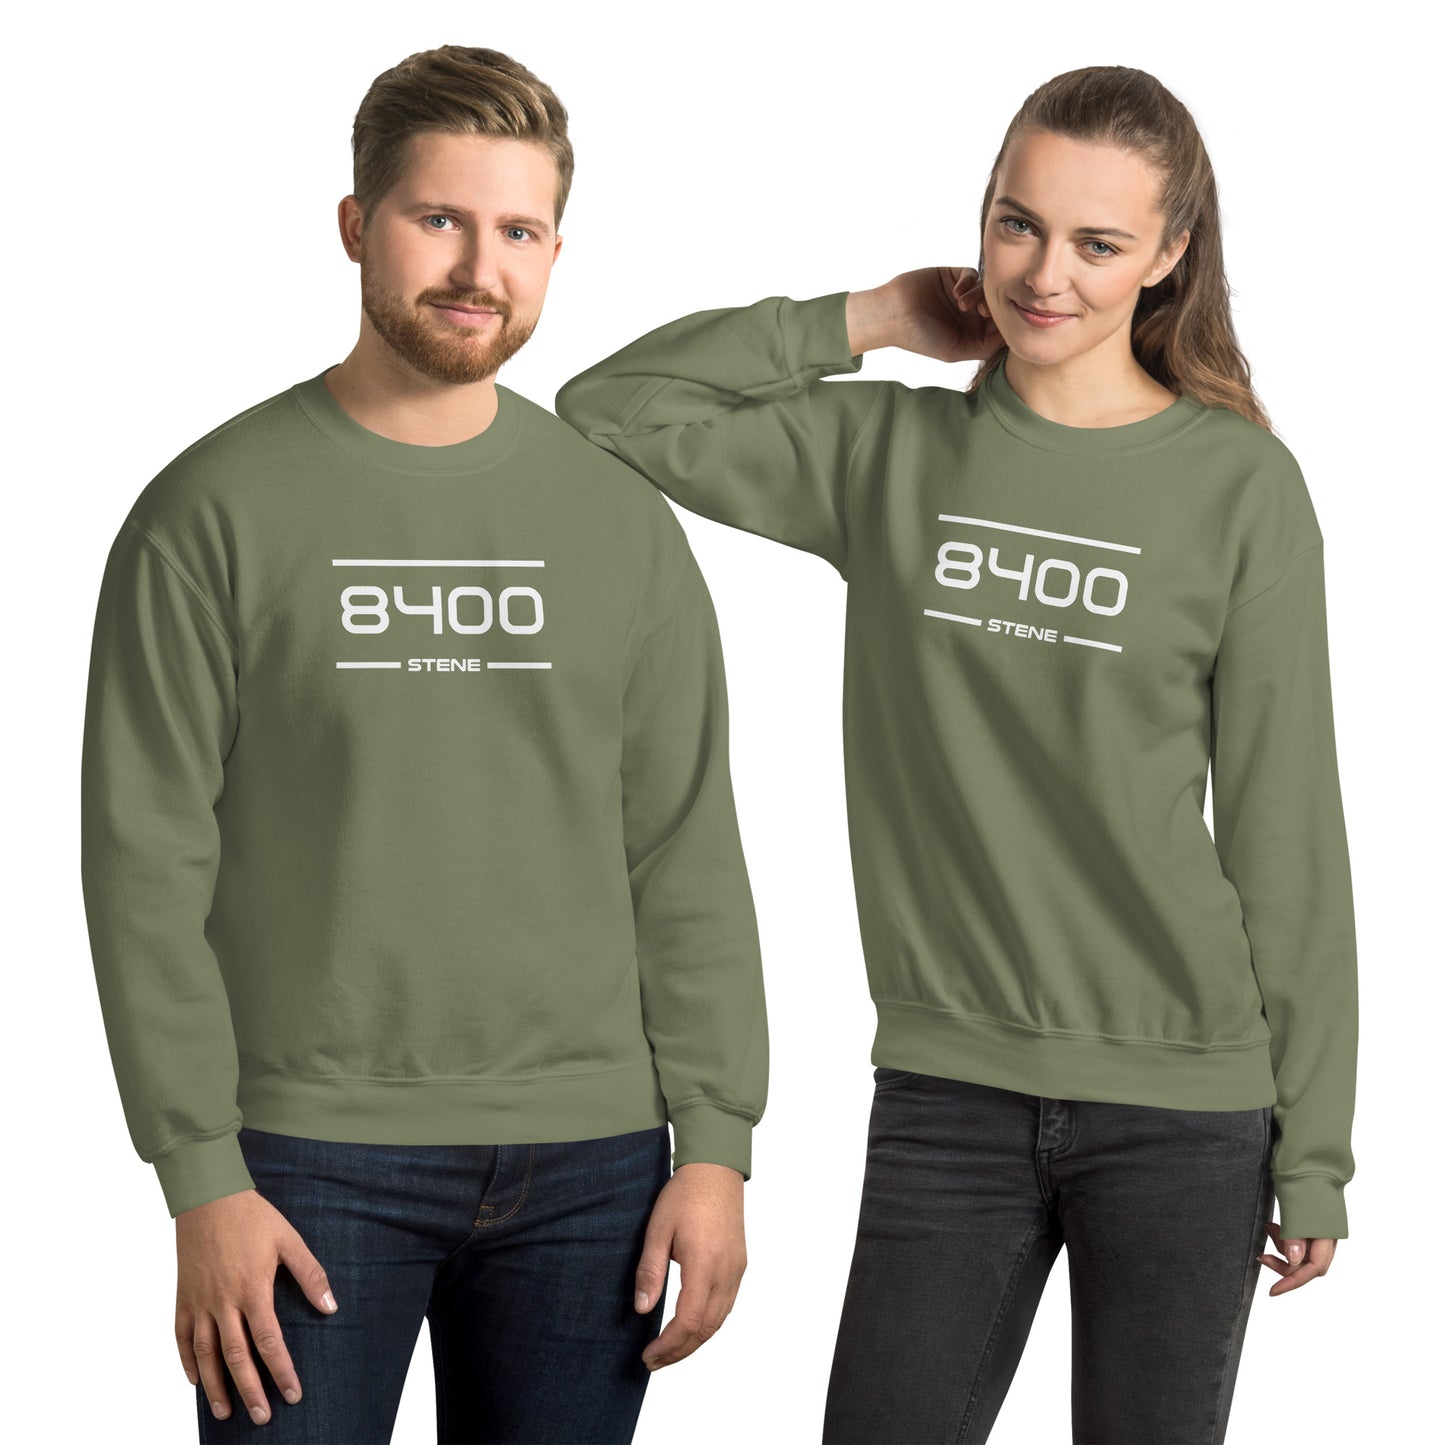 Sweater - 8400 - Stene (M/V)